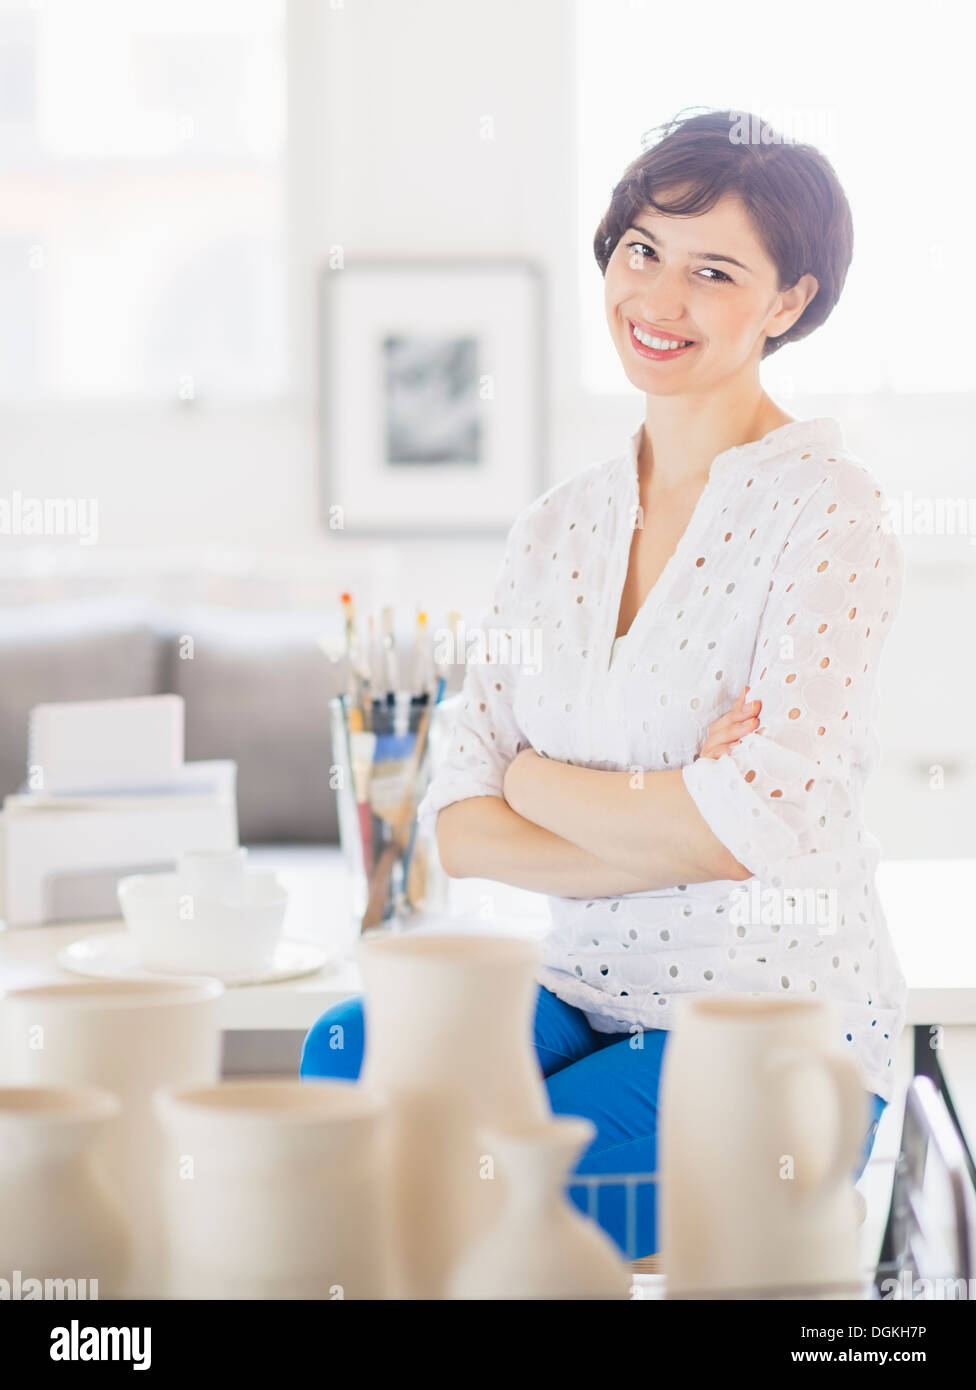 Portrait of smiling woman in art studio Stock Photo